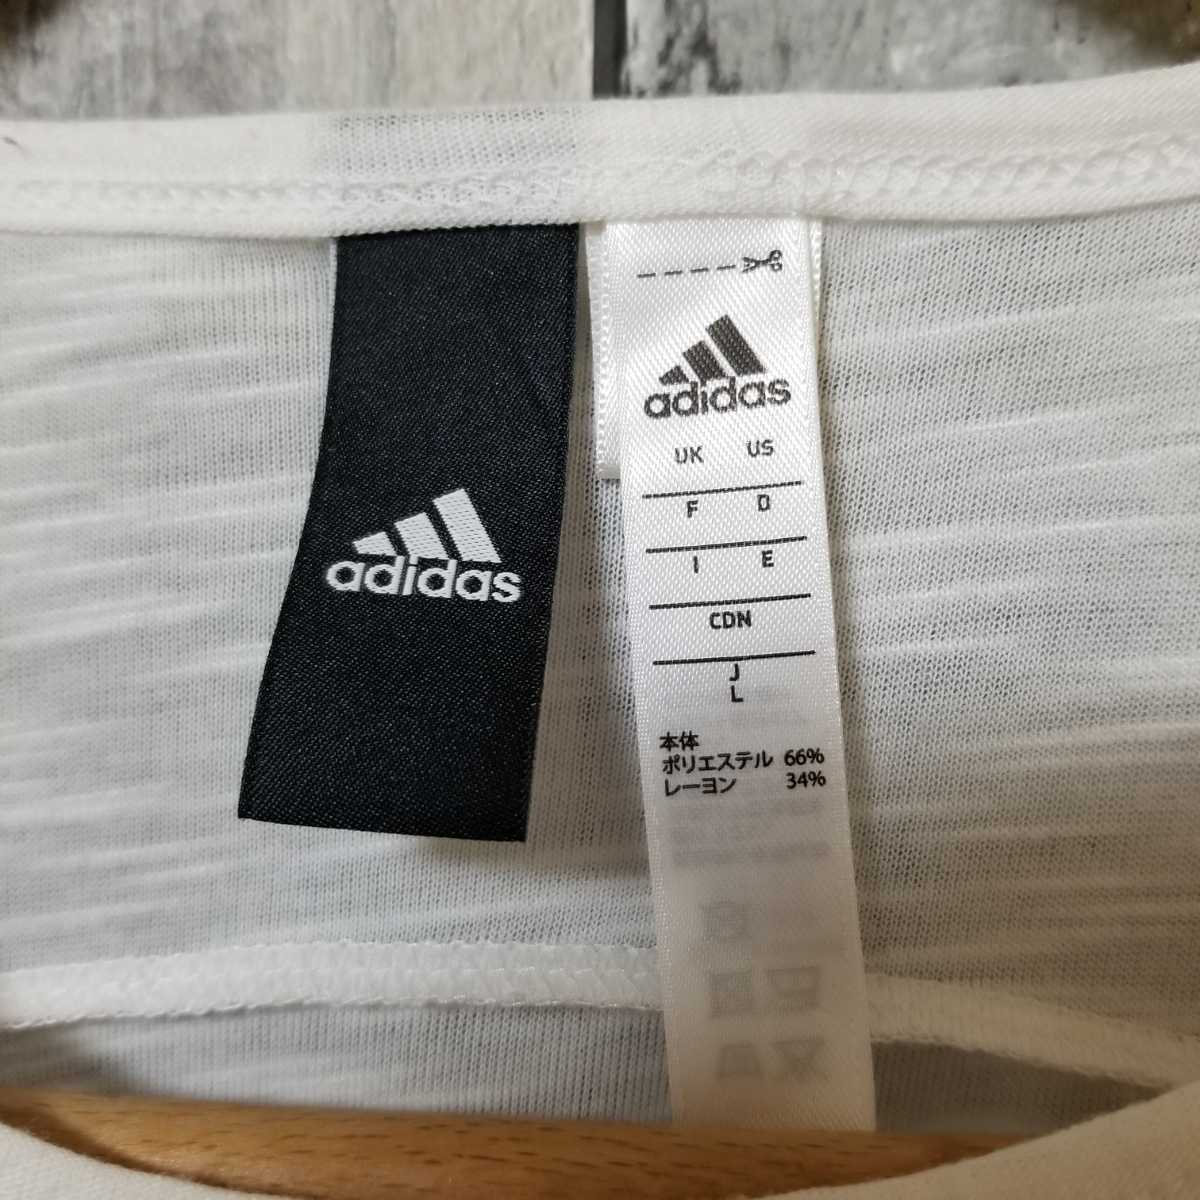 adidas Adidas короткий рукав футболка широкий L размер широкий тонкий 3шт.@ линия оттенок белого женский 